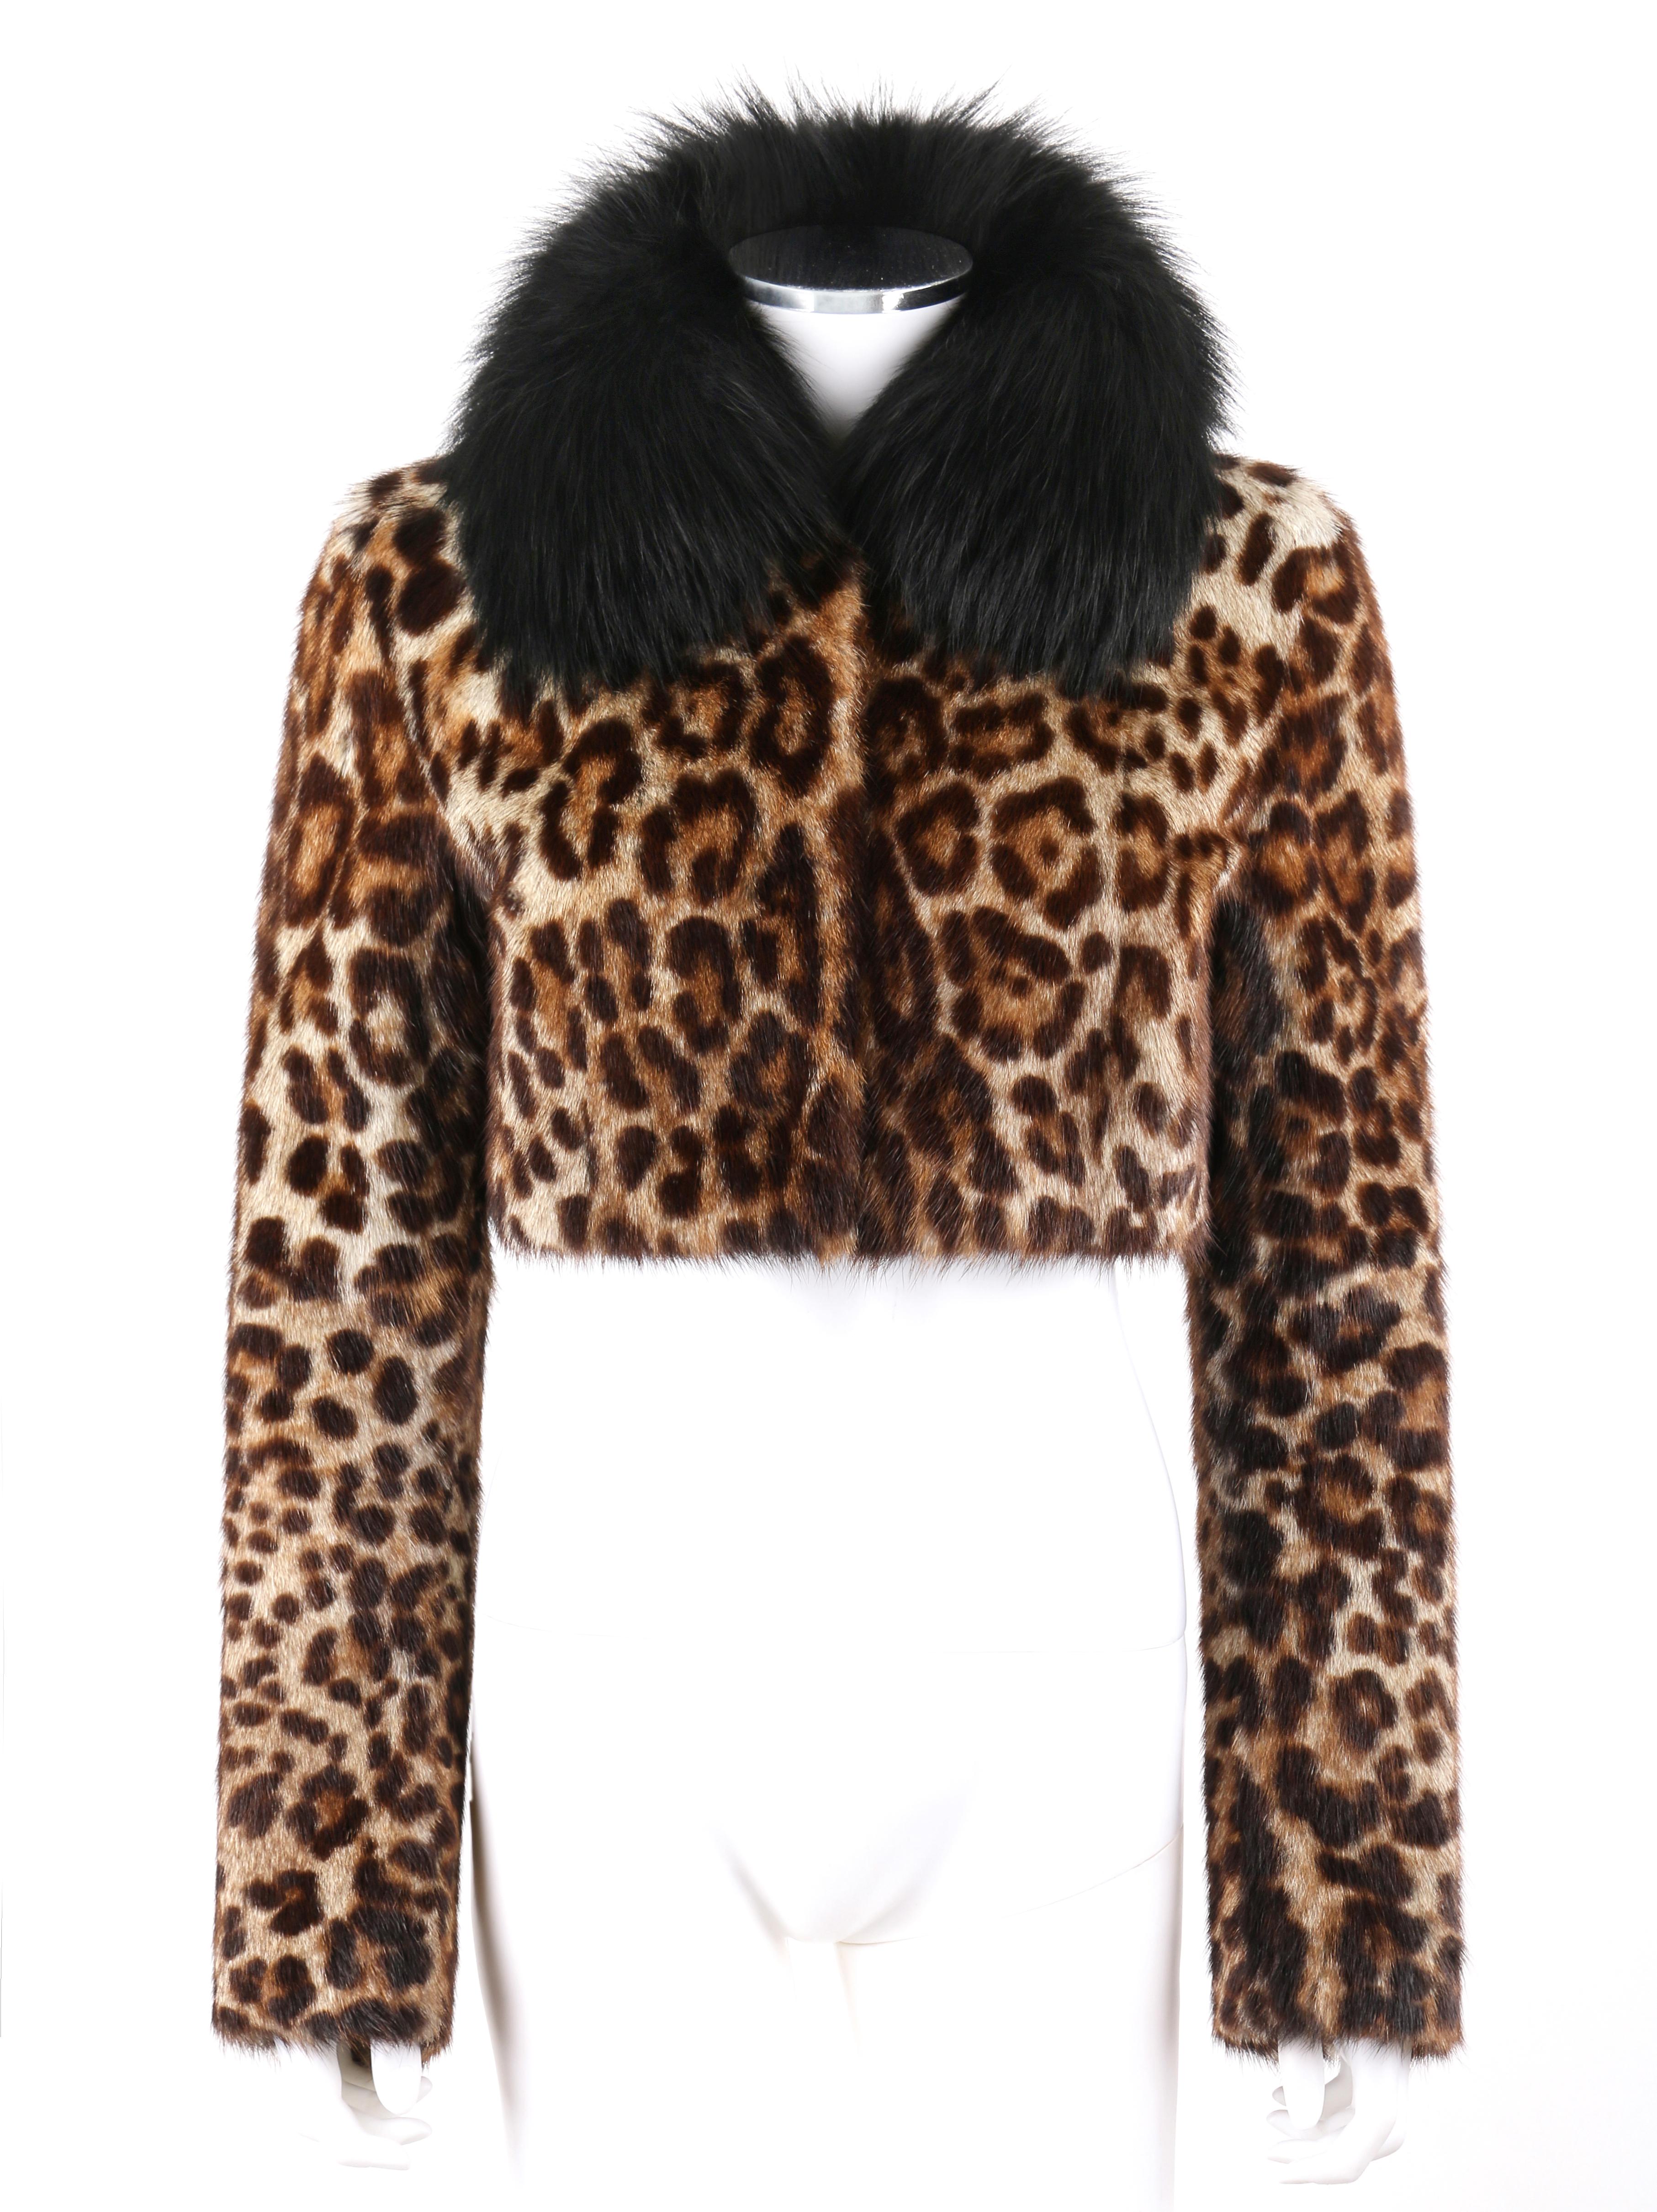 DESCRIPTION: DOLCE & GABBANA A/W 2007 Leopard Print Marmot & Fox Fur Collar Cropped Jacket
 
Brand / Manufacturer: Dolce & Gabbana
Collection: Autumn / Winter 2007
Designer: Domenico Dolce & Stefano Gabbana
Style: Cropped jacket
Color(s): Multi in